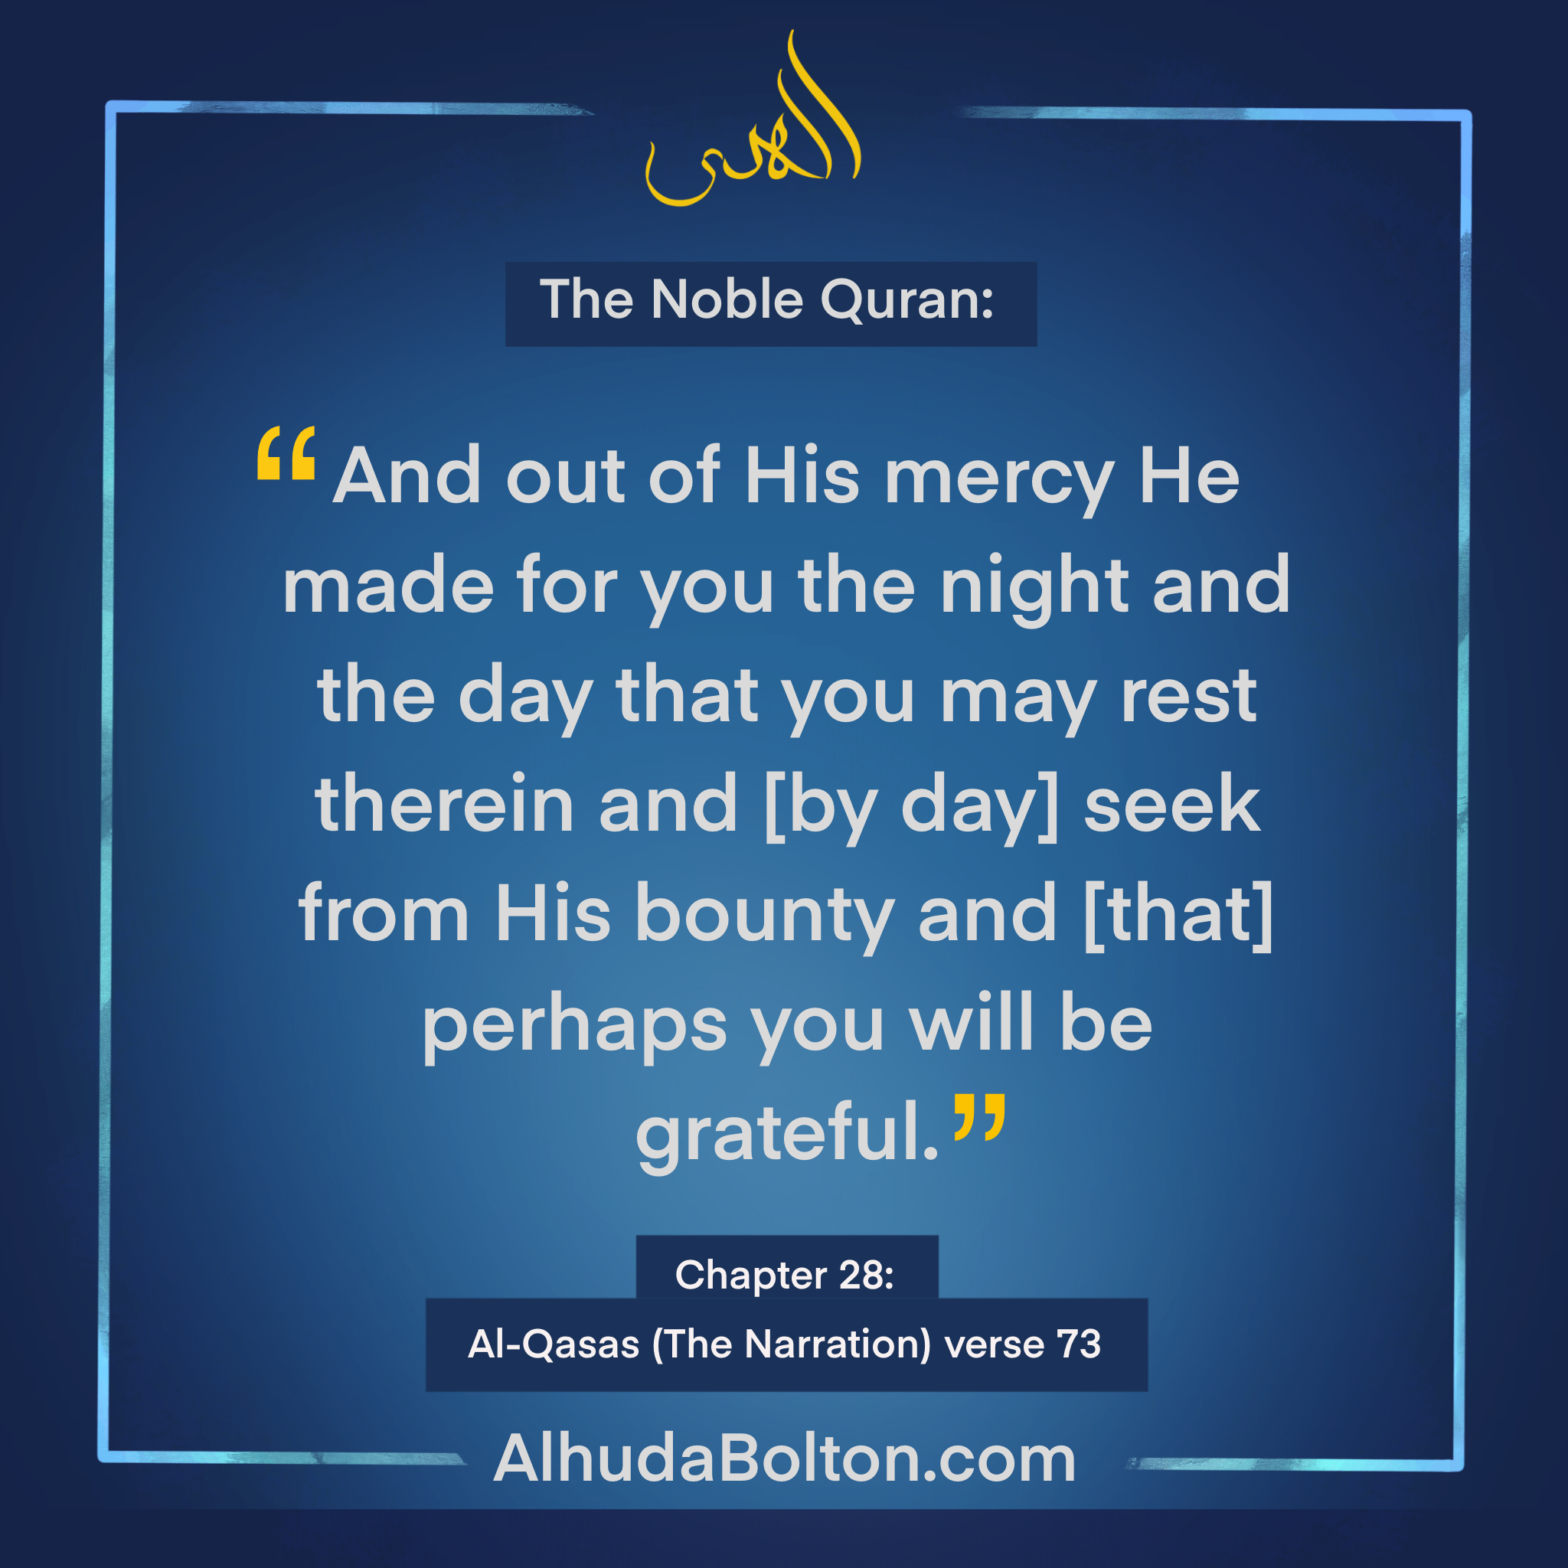 Quran: “..perhaps you will be grateful” 